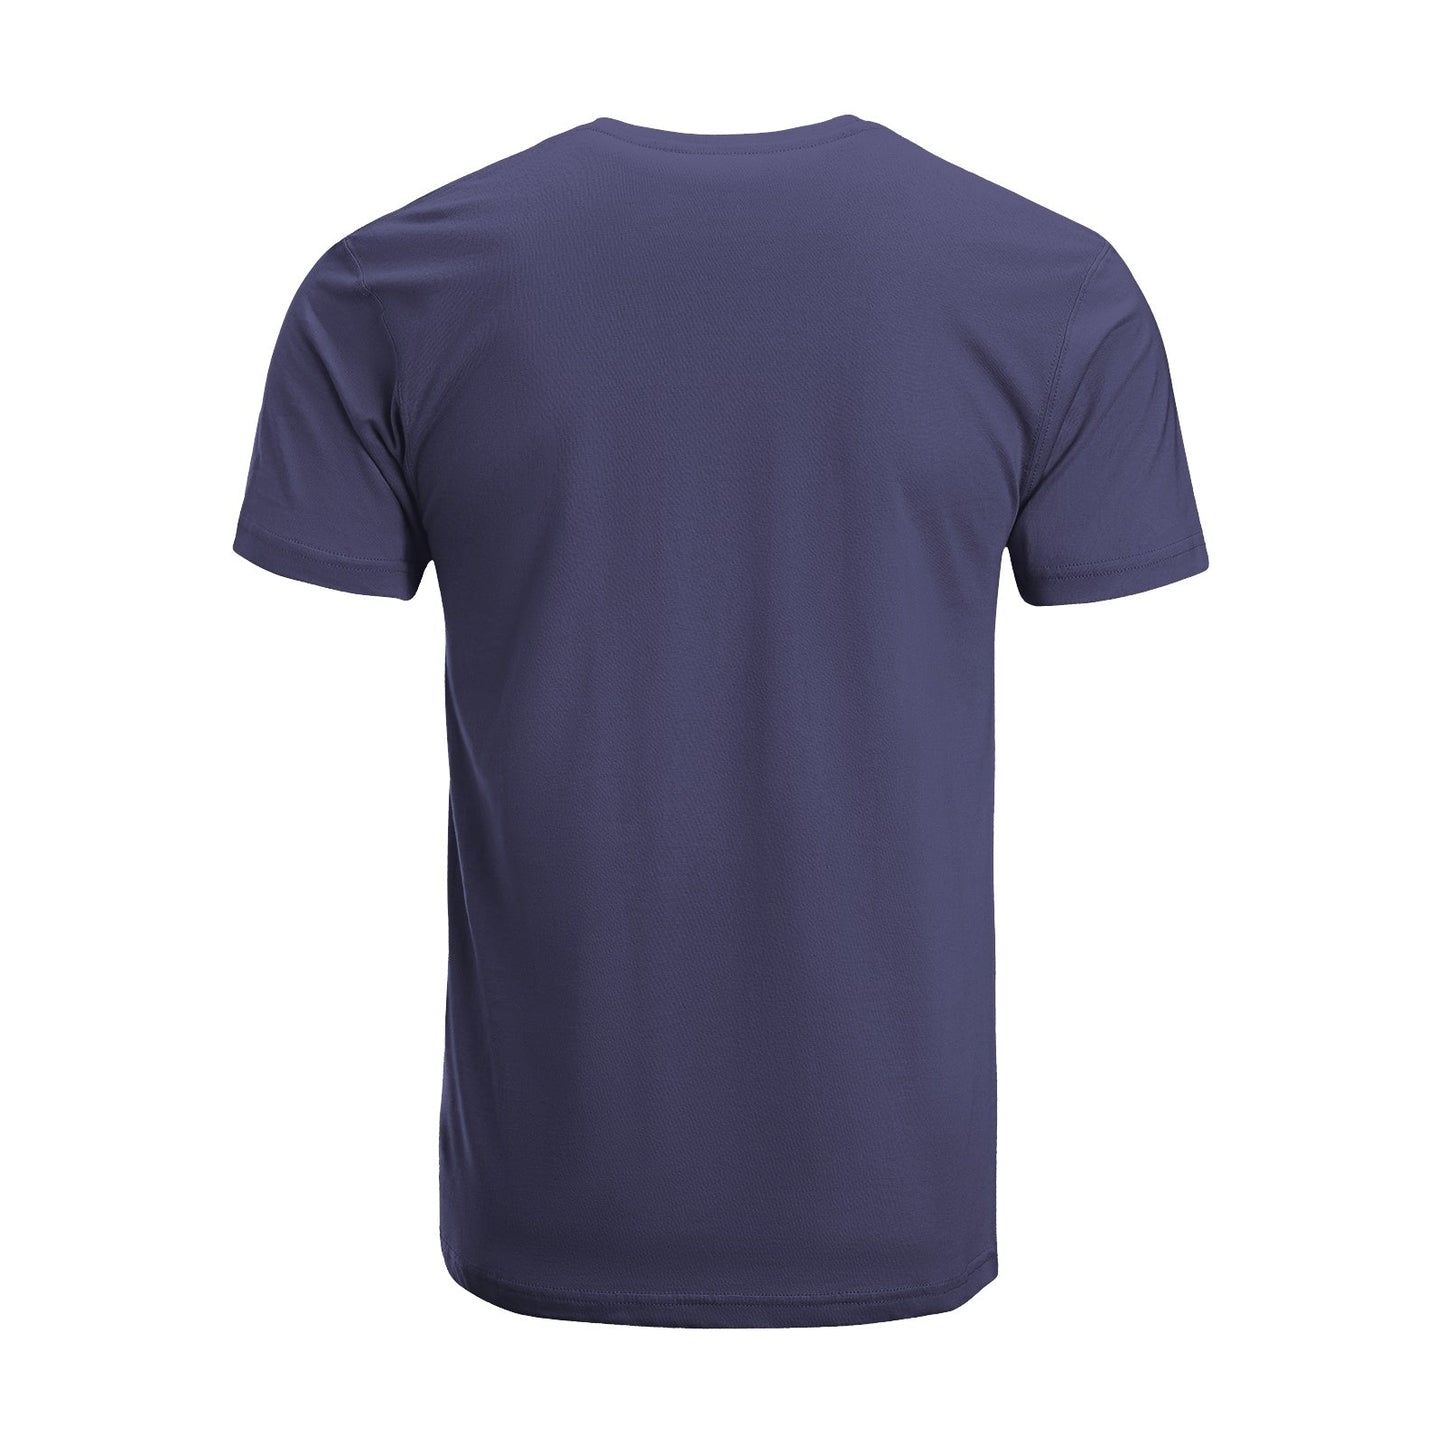 Unisex Short Sleeve Crew Neck Cotton Jersey T-Shirt MOM 44